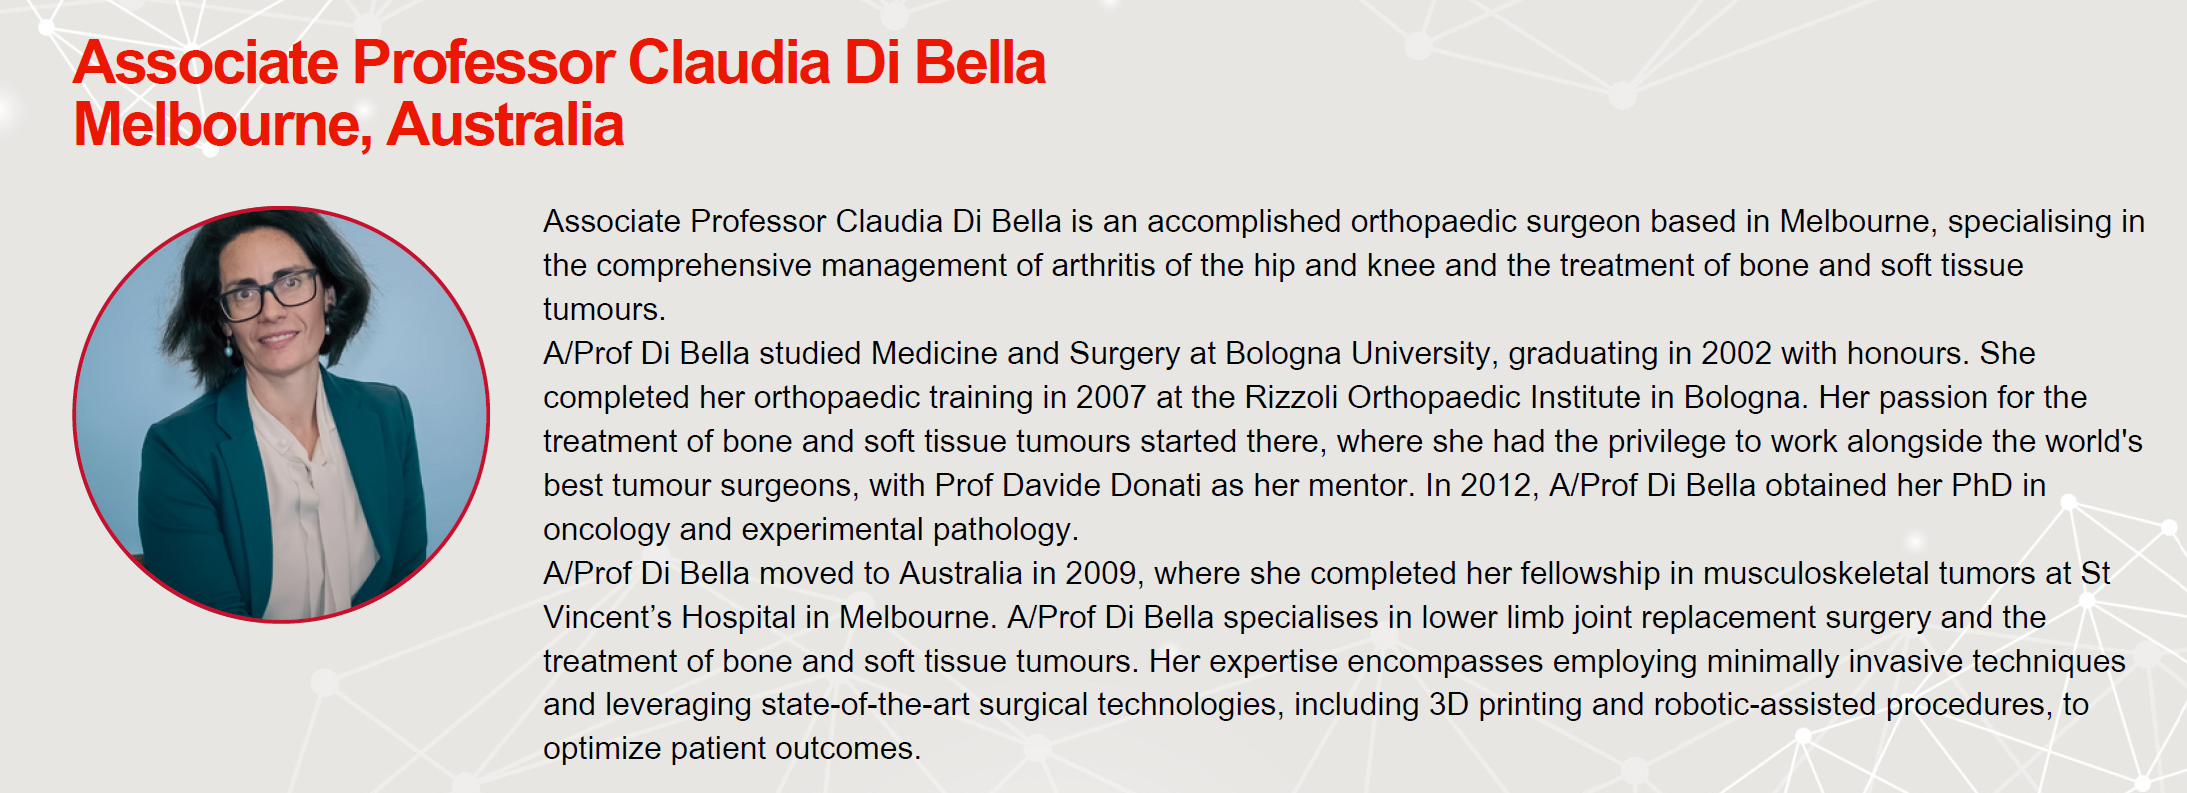 A Prof. Claudia Di Bella